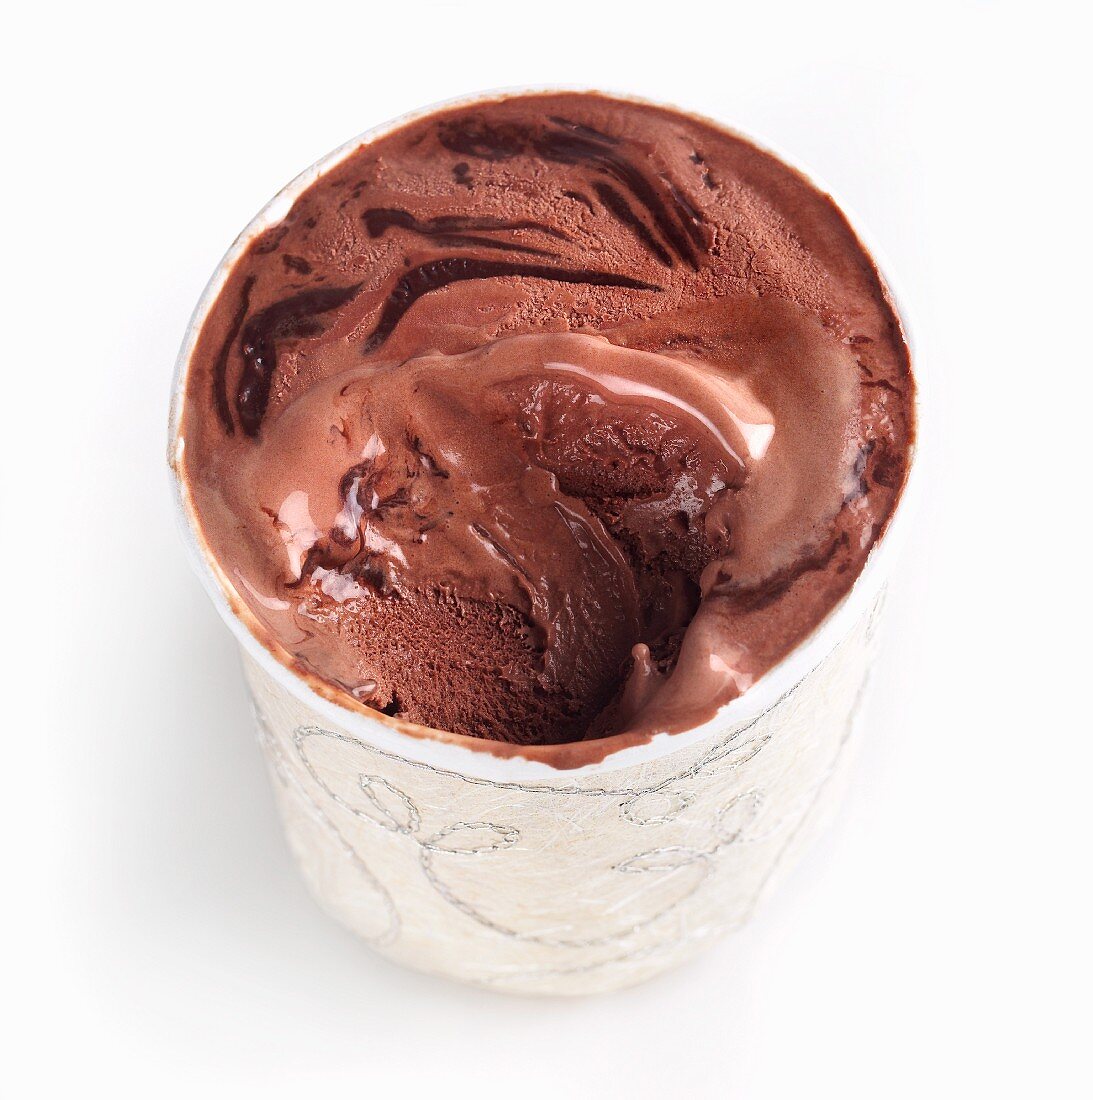 Chocolate ice cream in a beaker